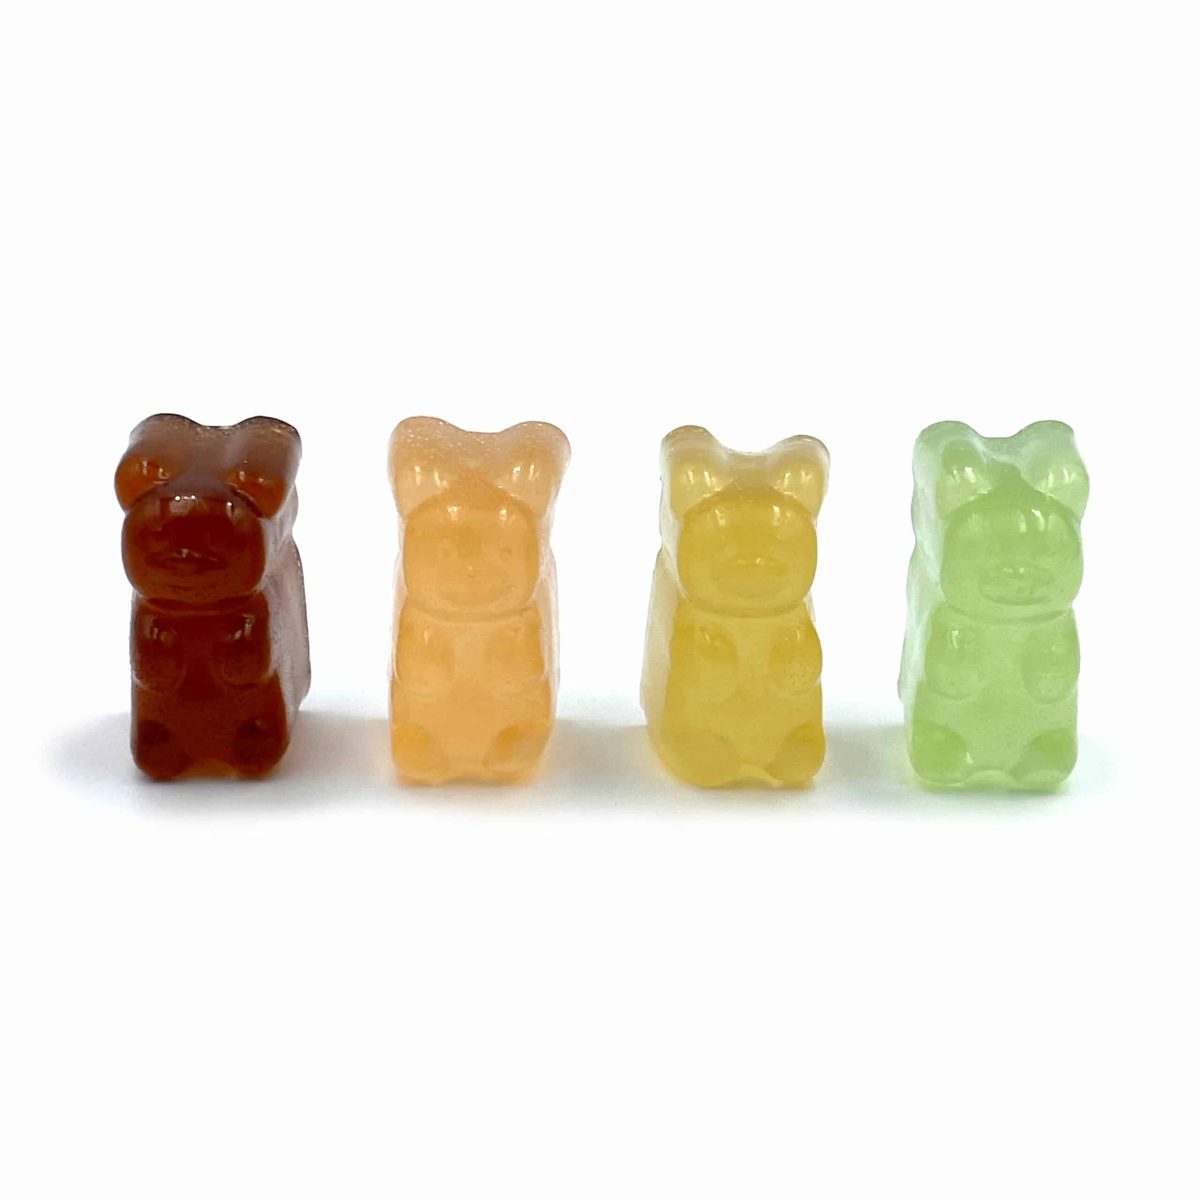 Buy Ripped Edibles - Bulk Bears Vol.3 1000MG THC at MMJ Express Online Shop